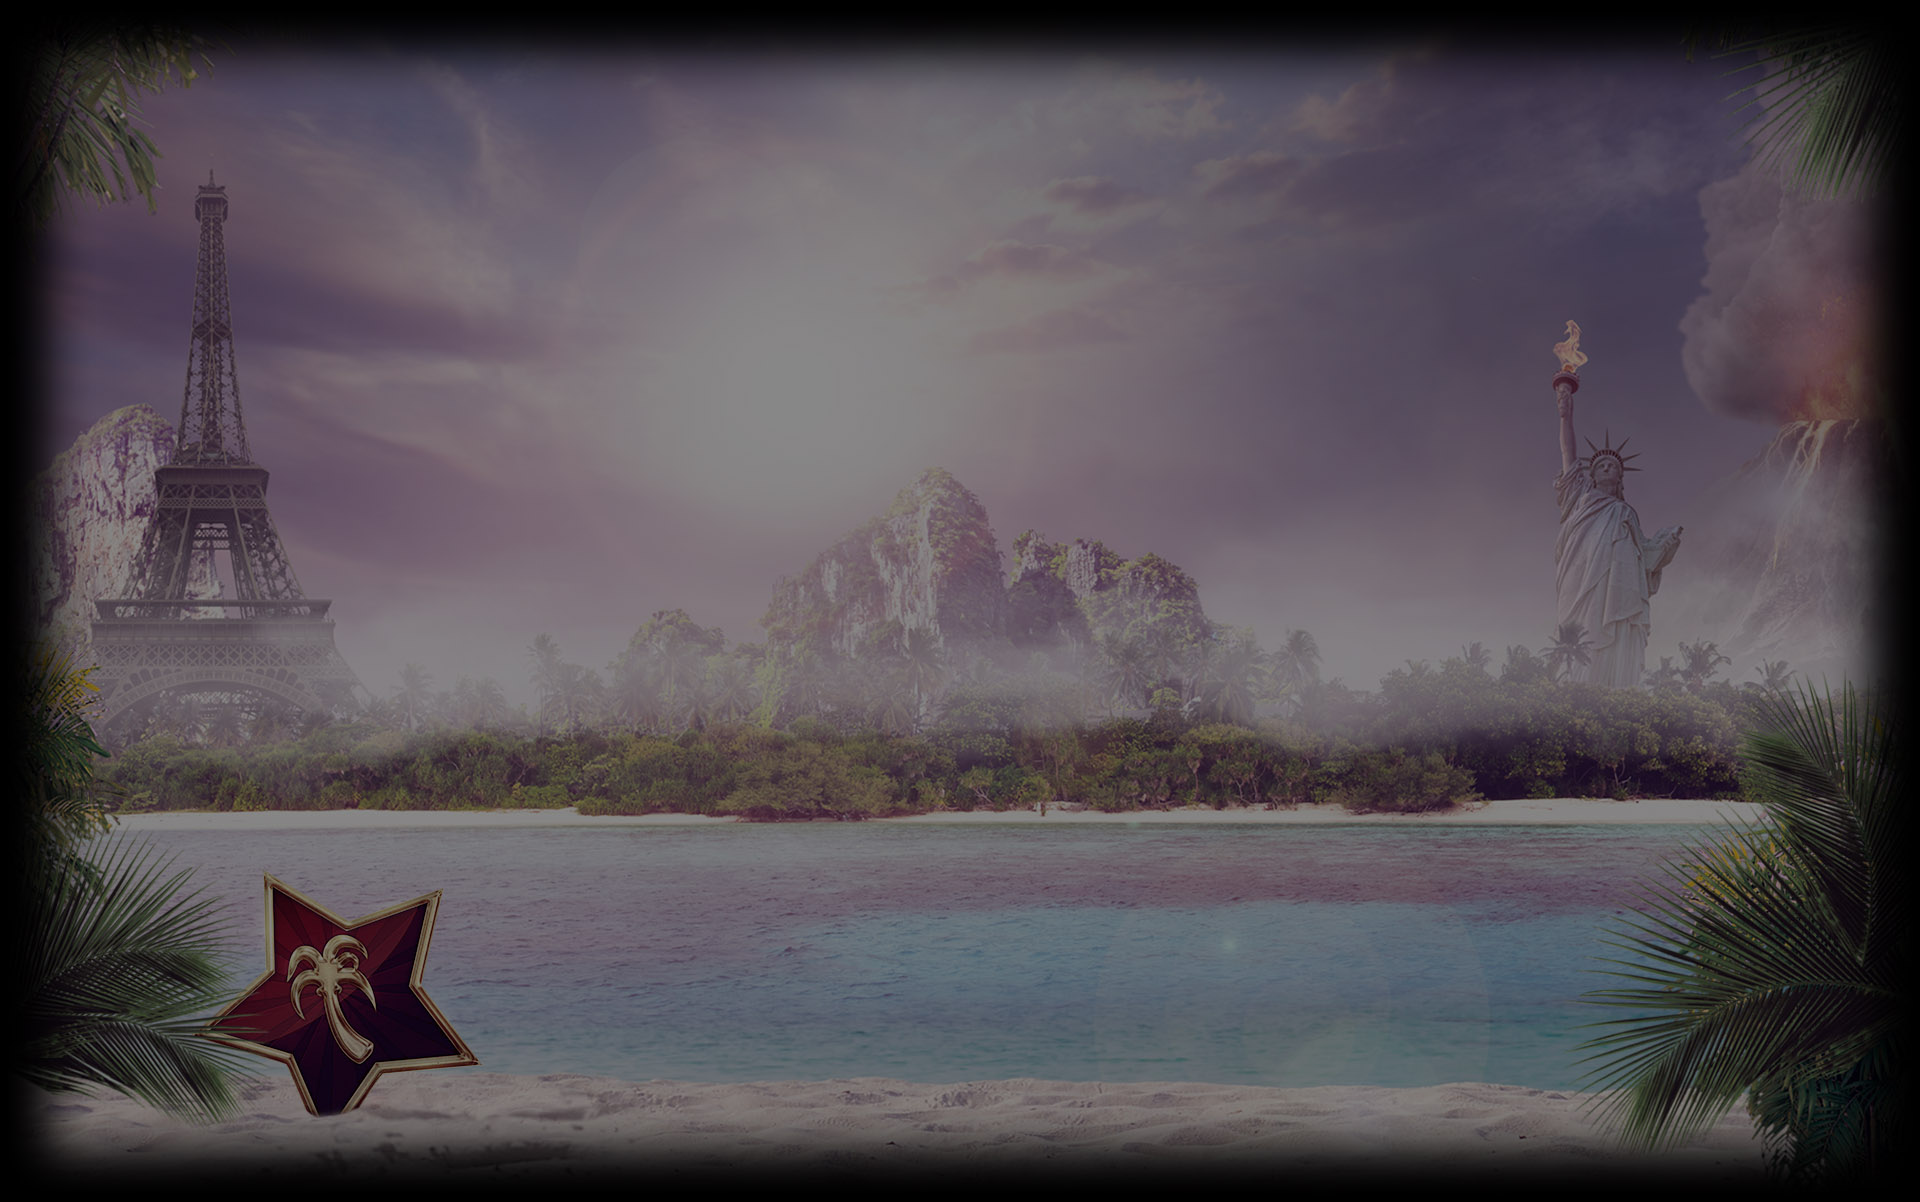 Tropico 6 Appid 4927 Steamdb